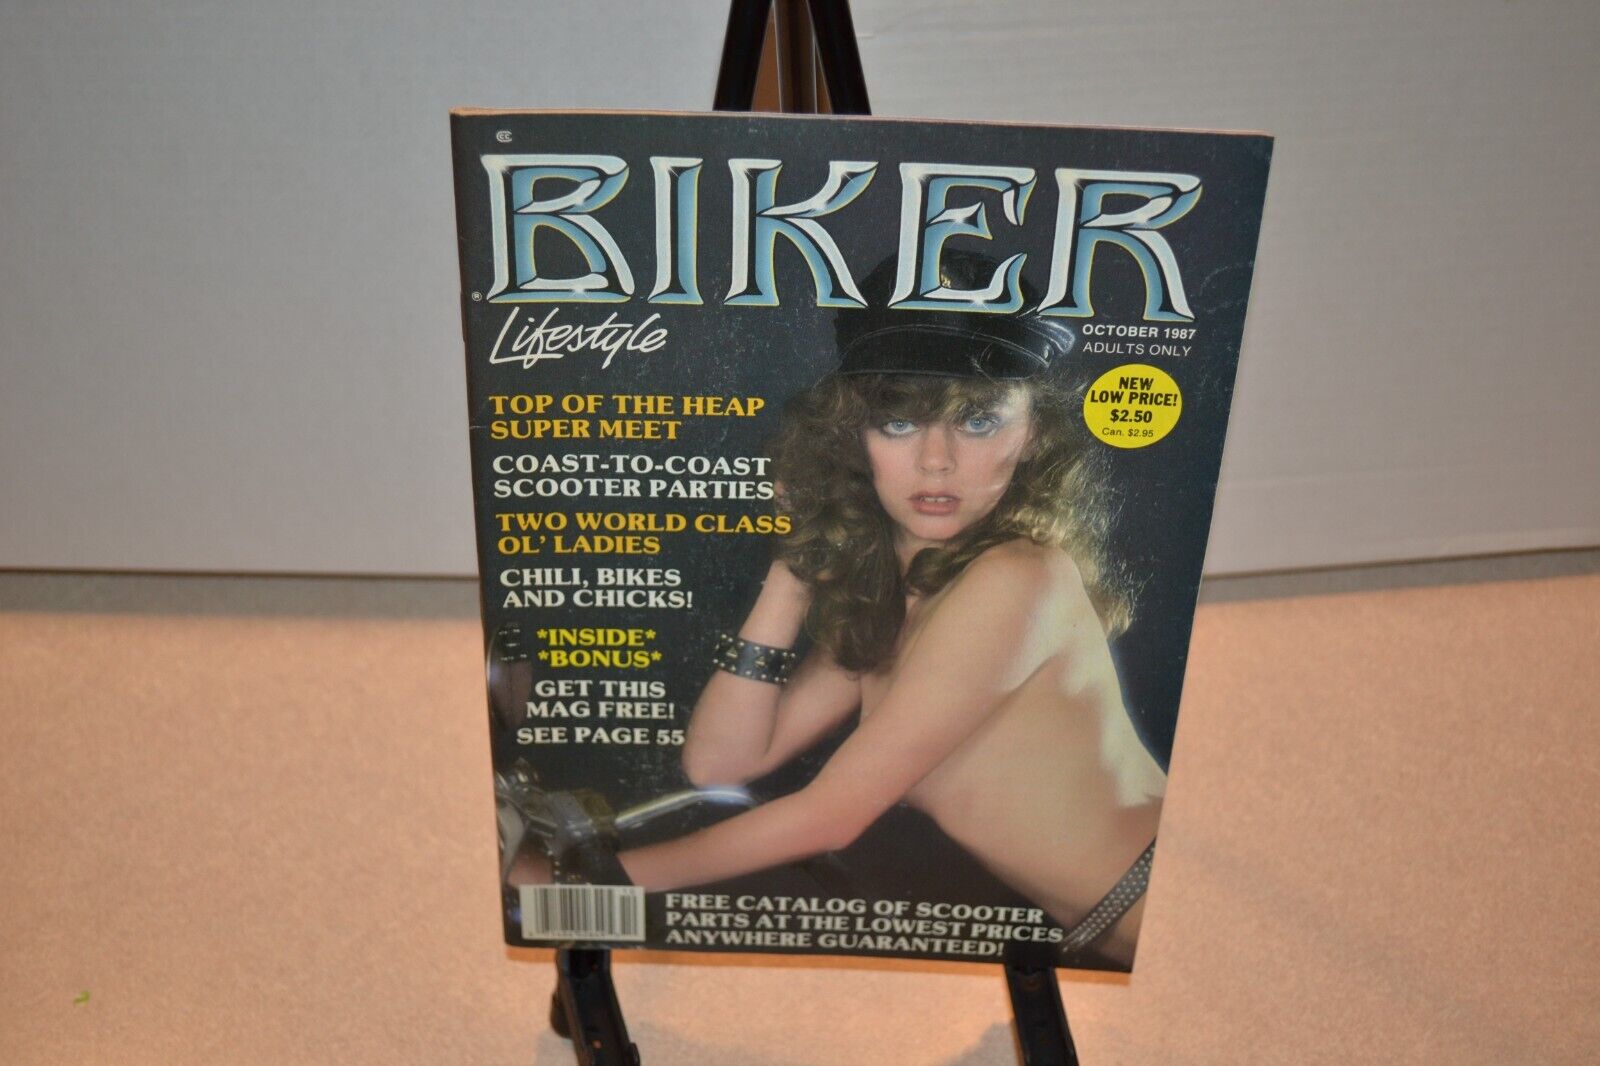 Biker Lifestyle Magazine October 1987 Vintage Motorcycle Publication (Loc 2)